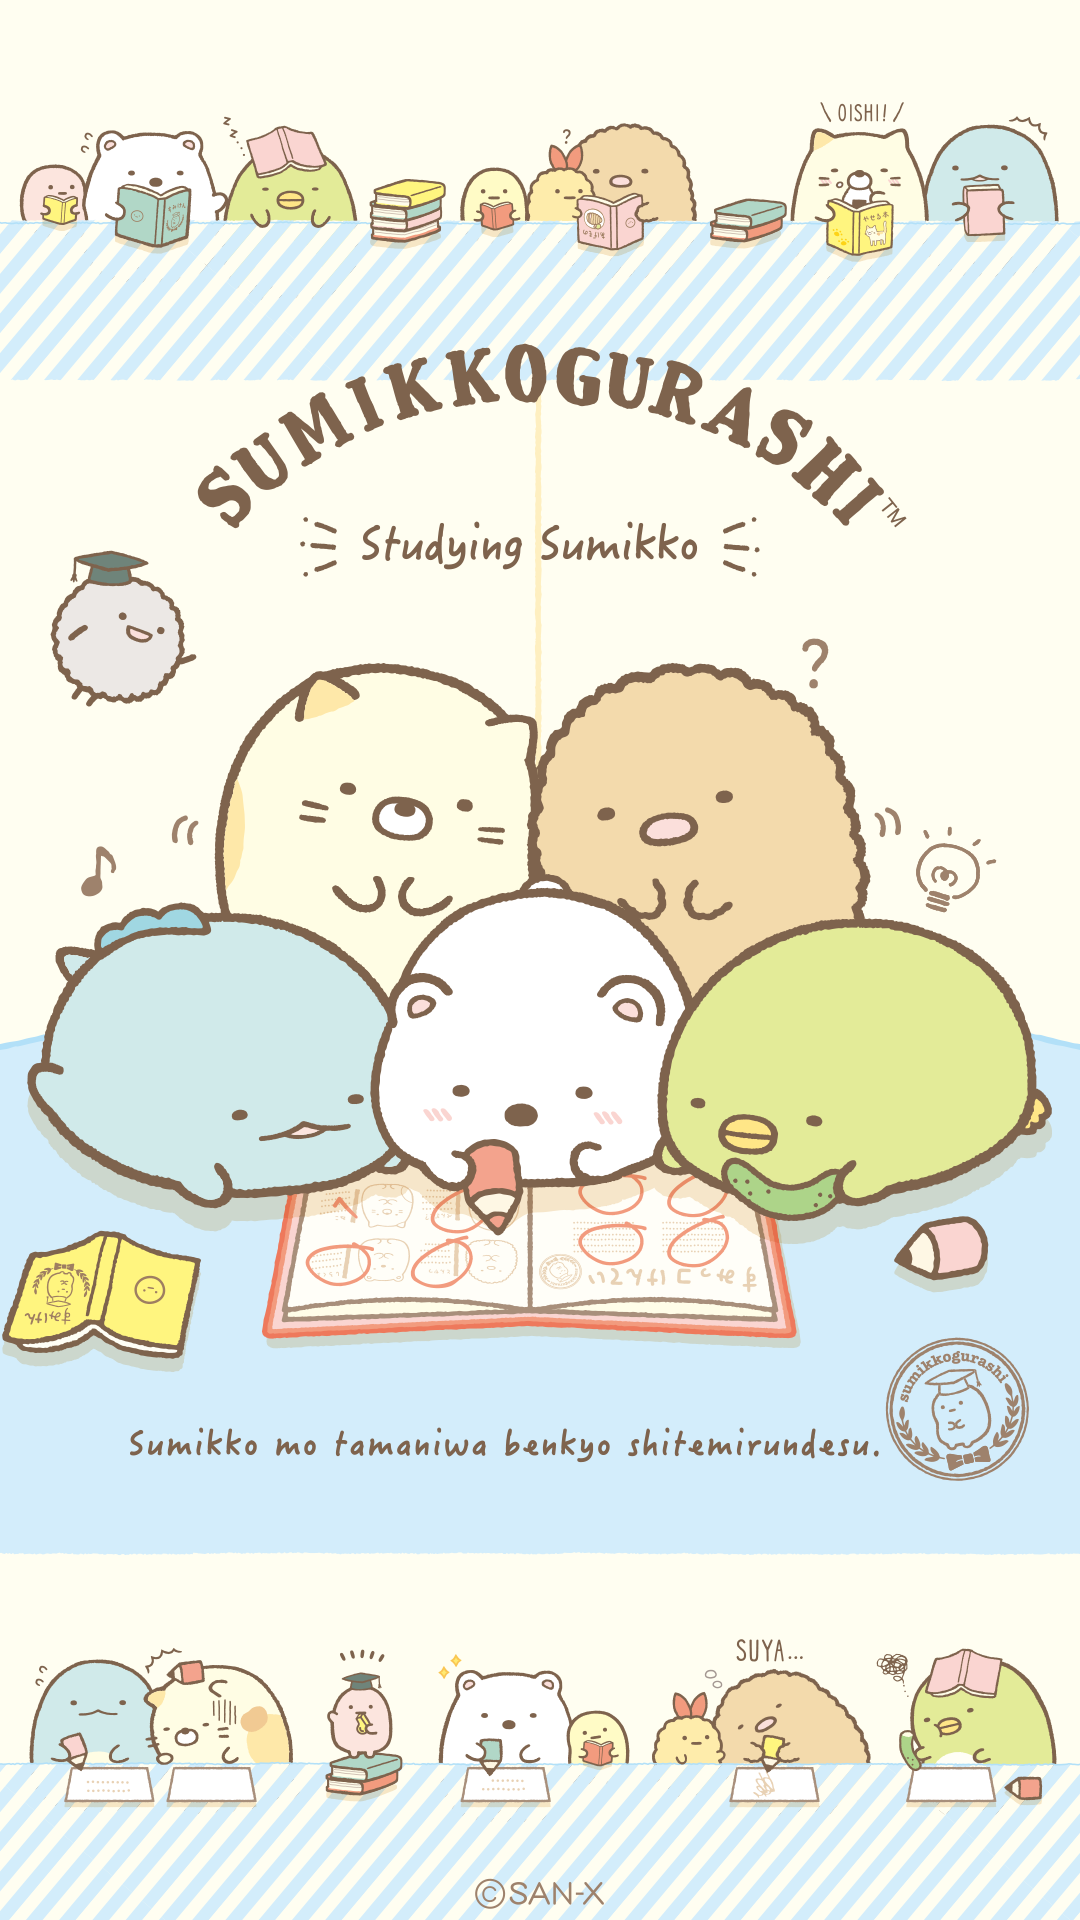 sumikko gurashi wallpaper iphone,text,cartoon,font,illustration,child